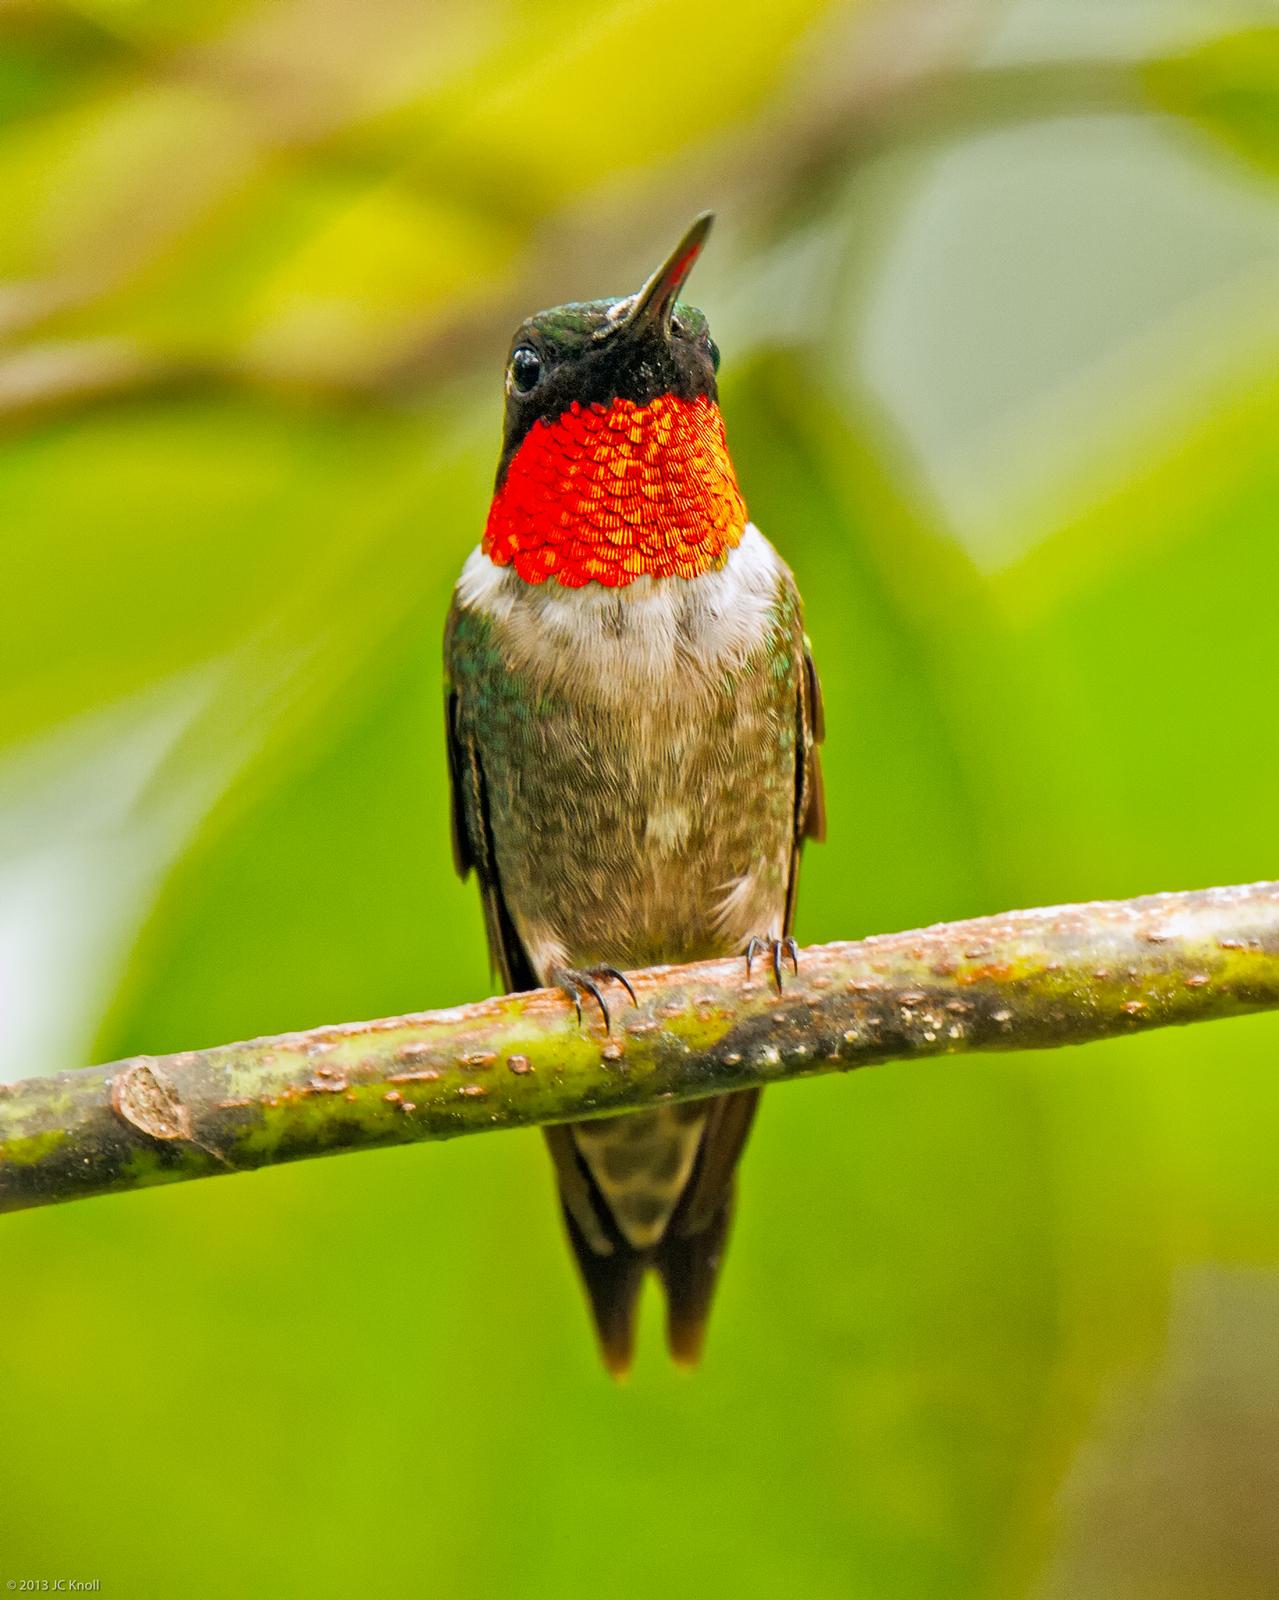 Ruby-throated Hummingbird Photo by JC Knoll